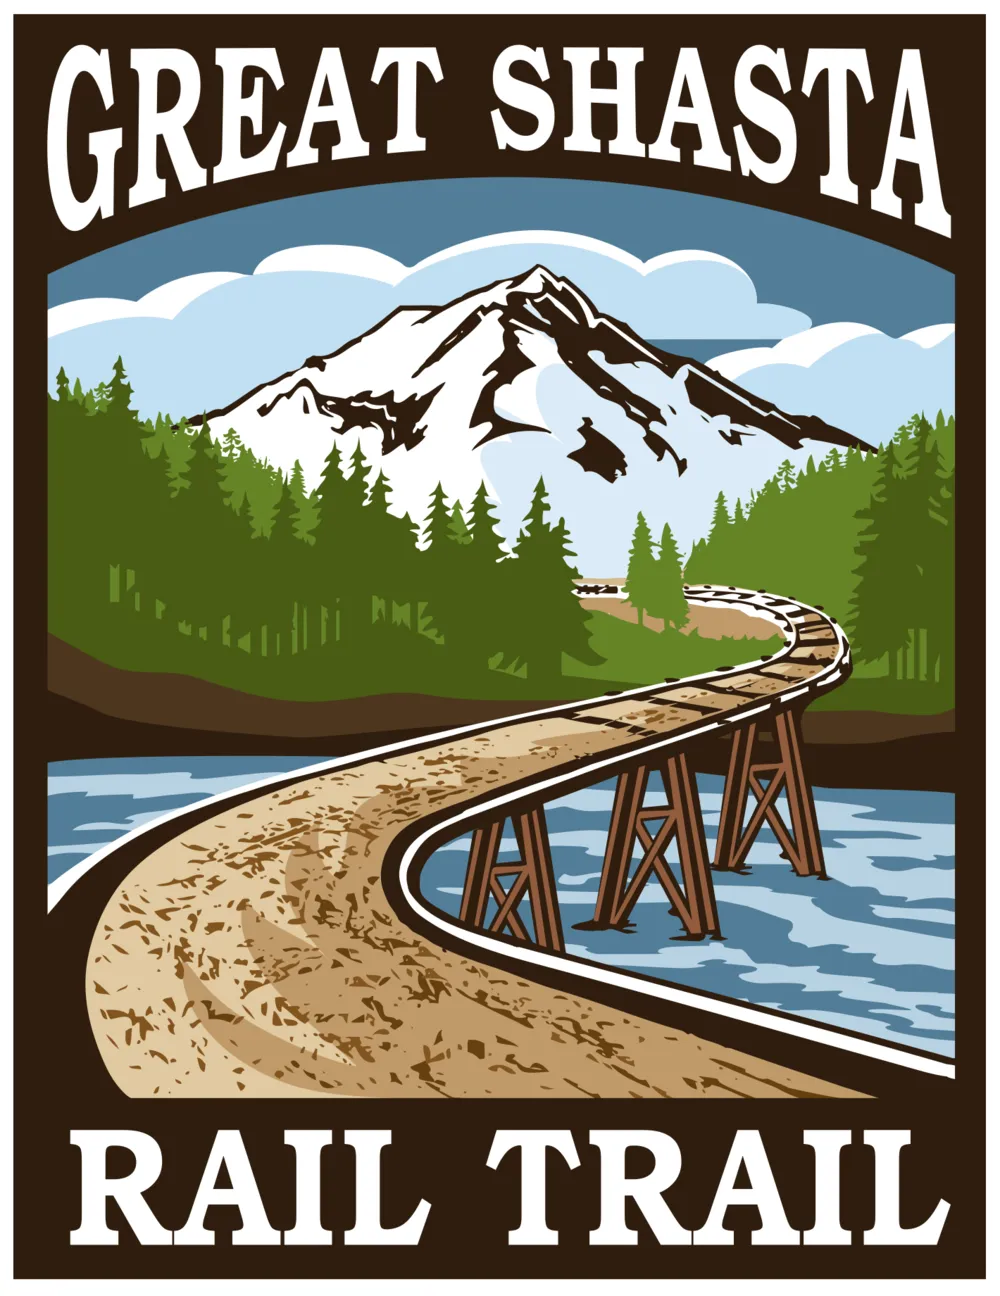 The Great Shasta Rail Trail